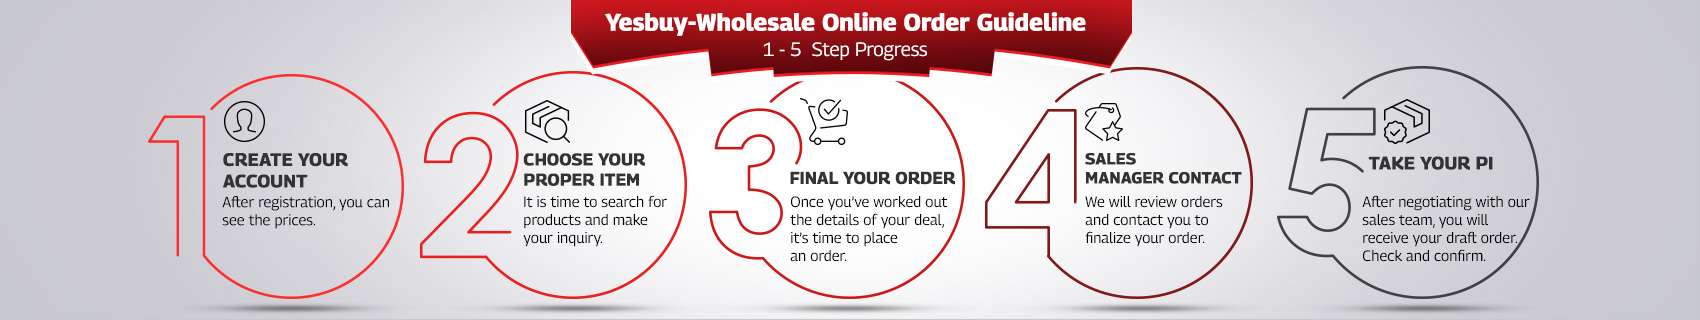 Yesbuy-Wholesale Online Order Guideline